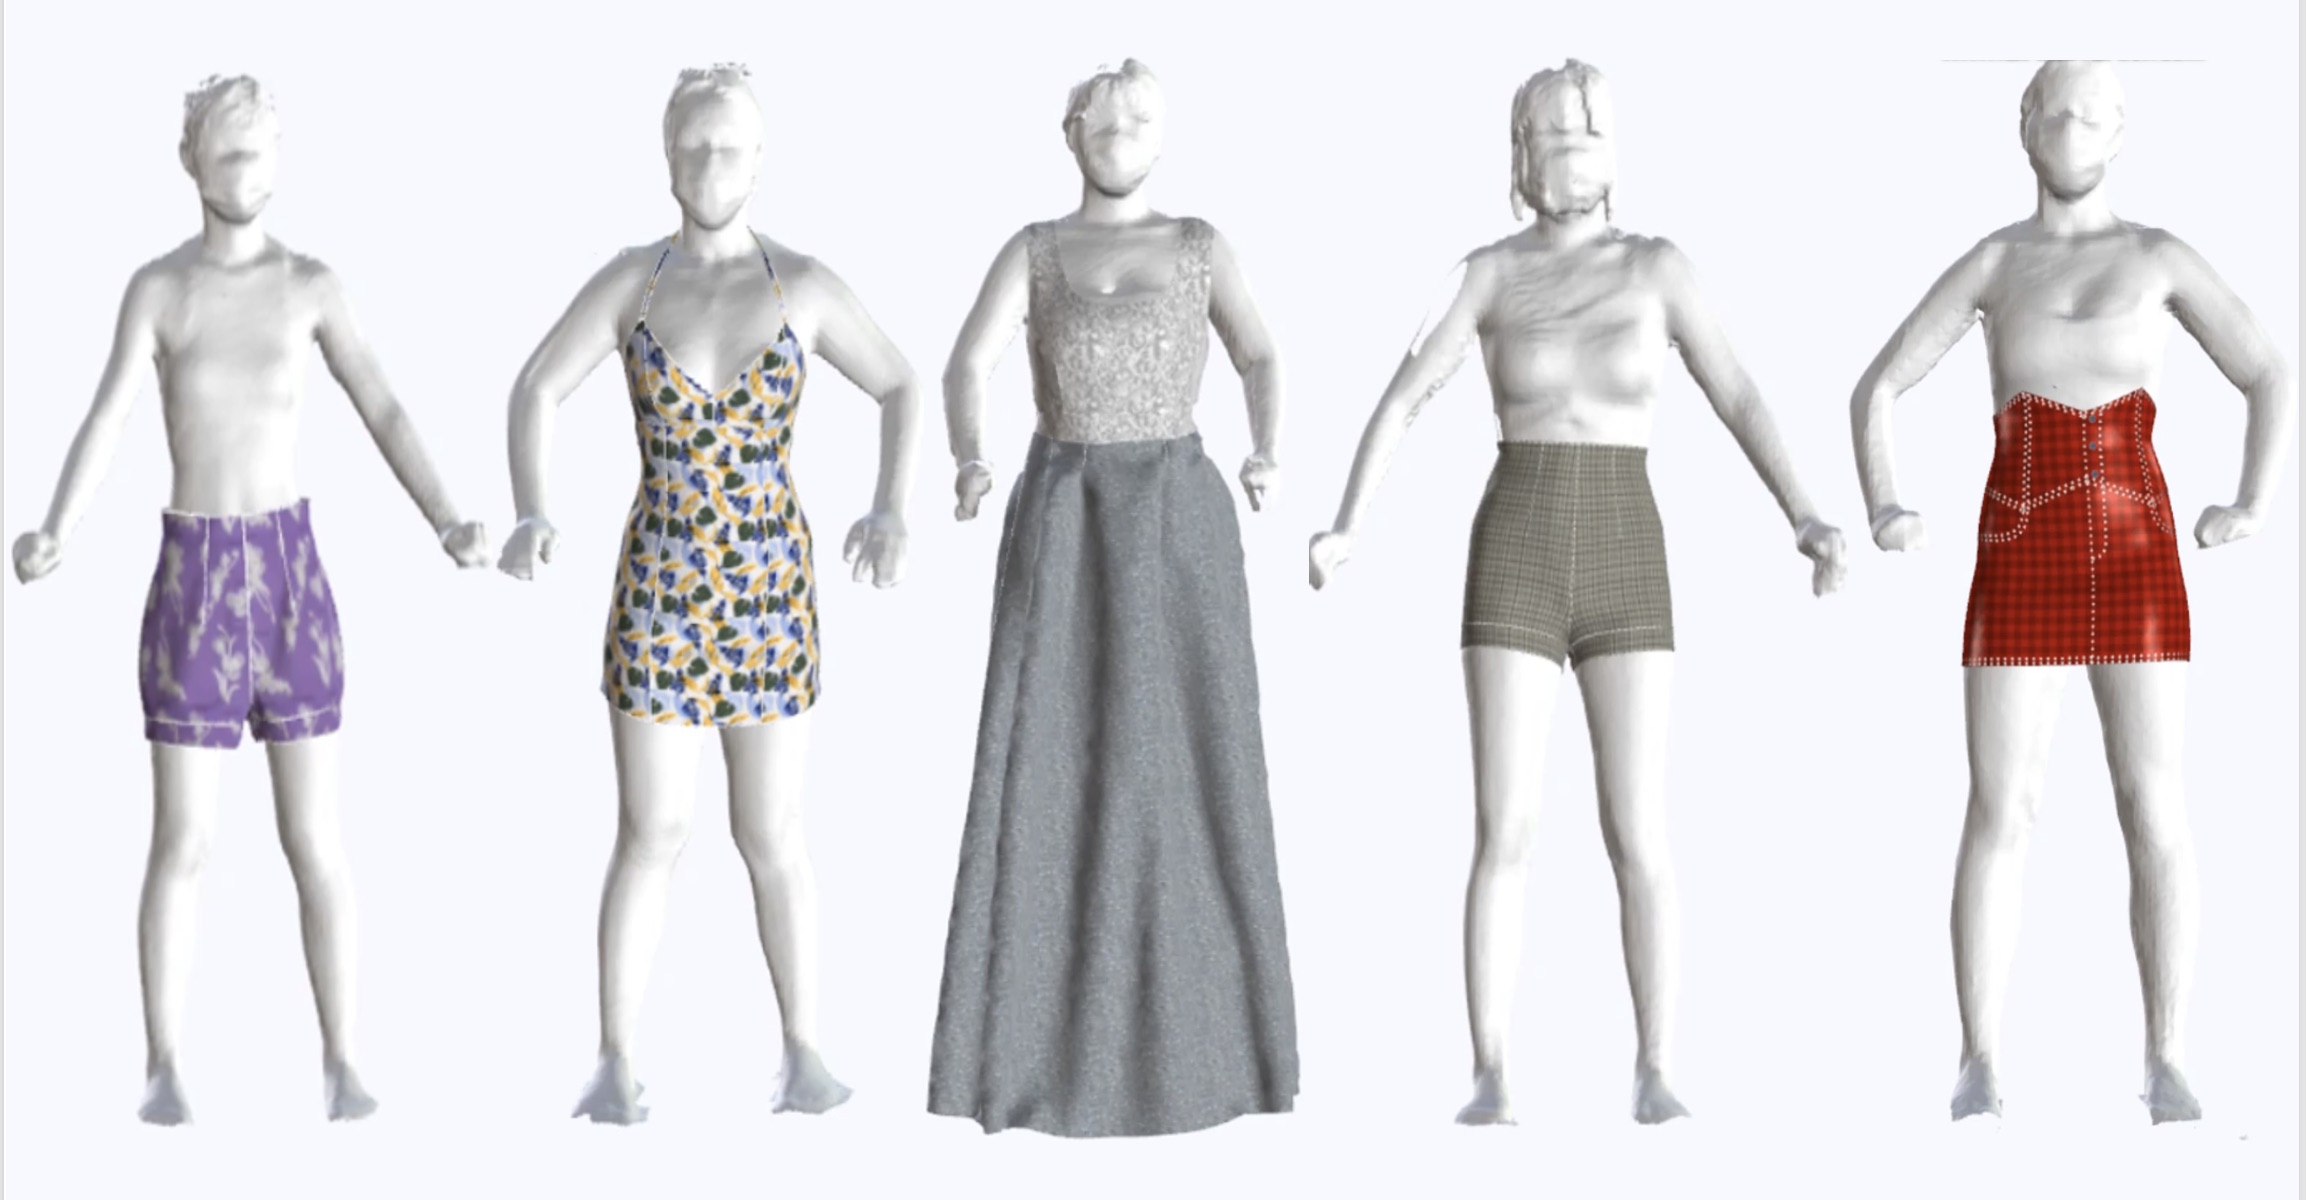 Digital Clothing Simulation on Personal Avatars